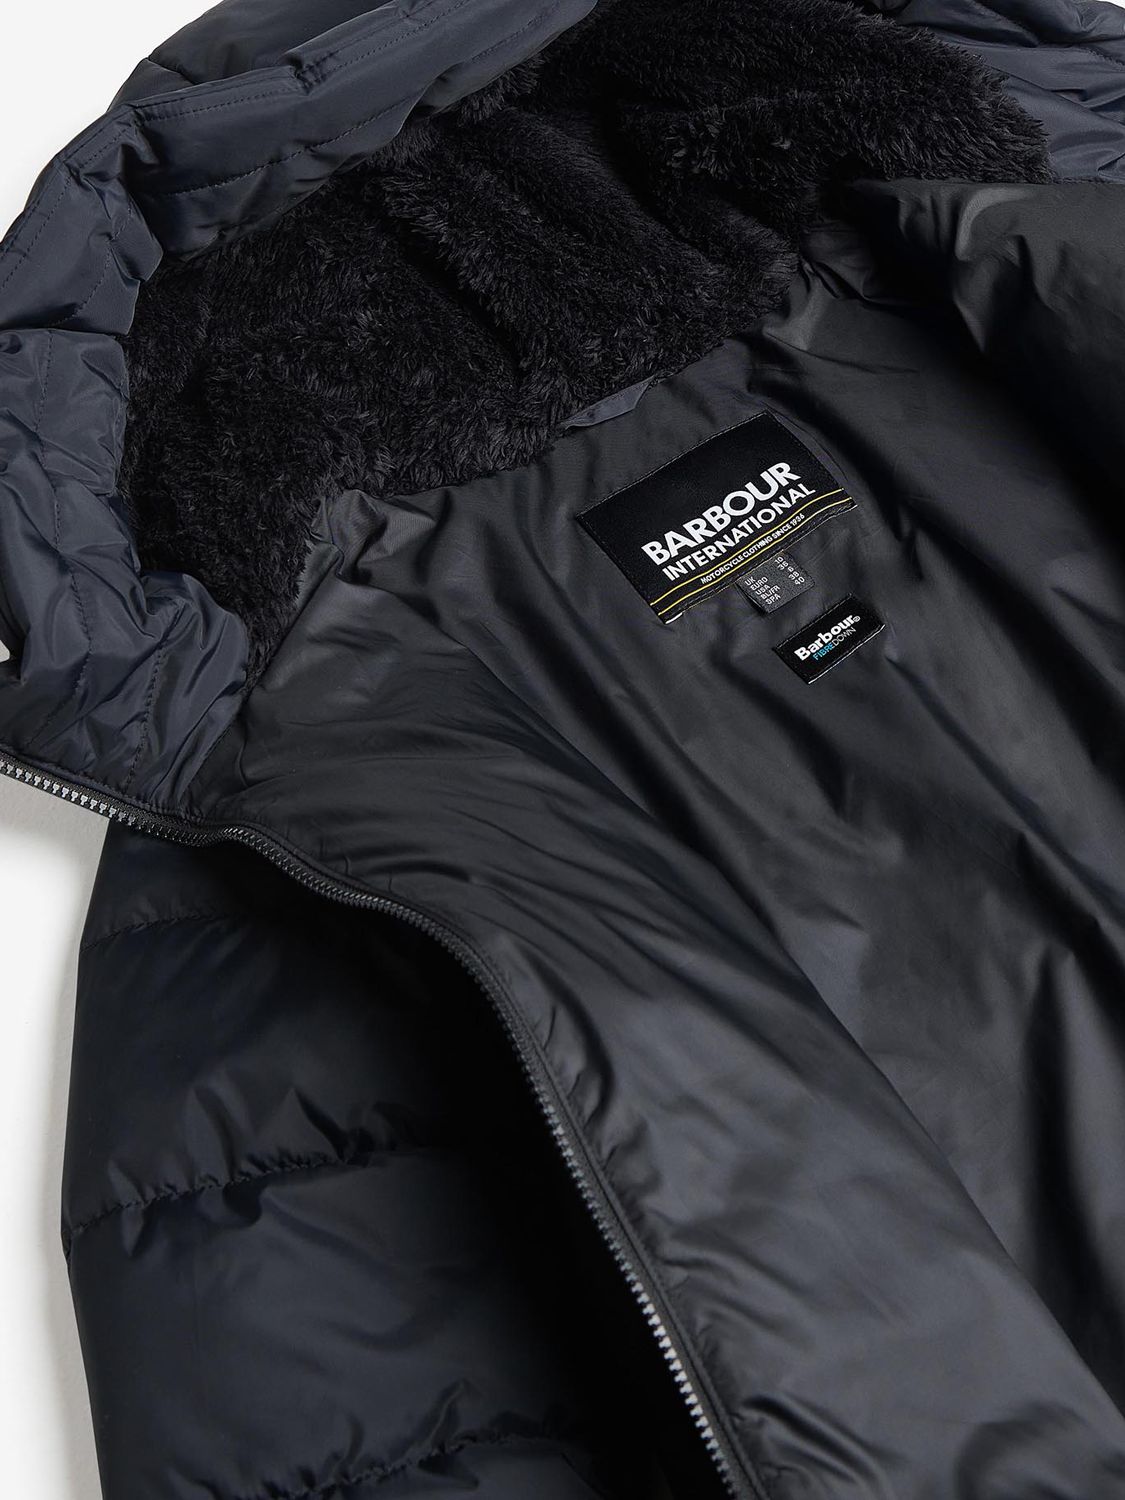 Barbour International Boston Quilted Jacket, Black at John Lewis & Partners